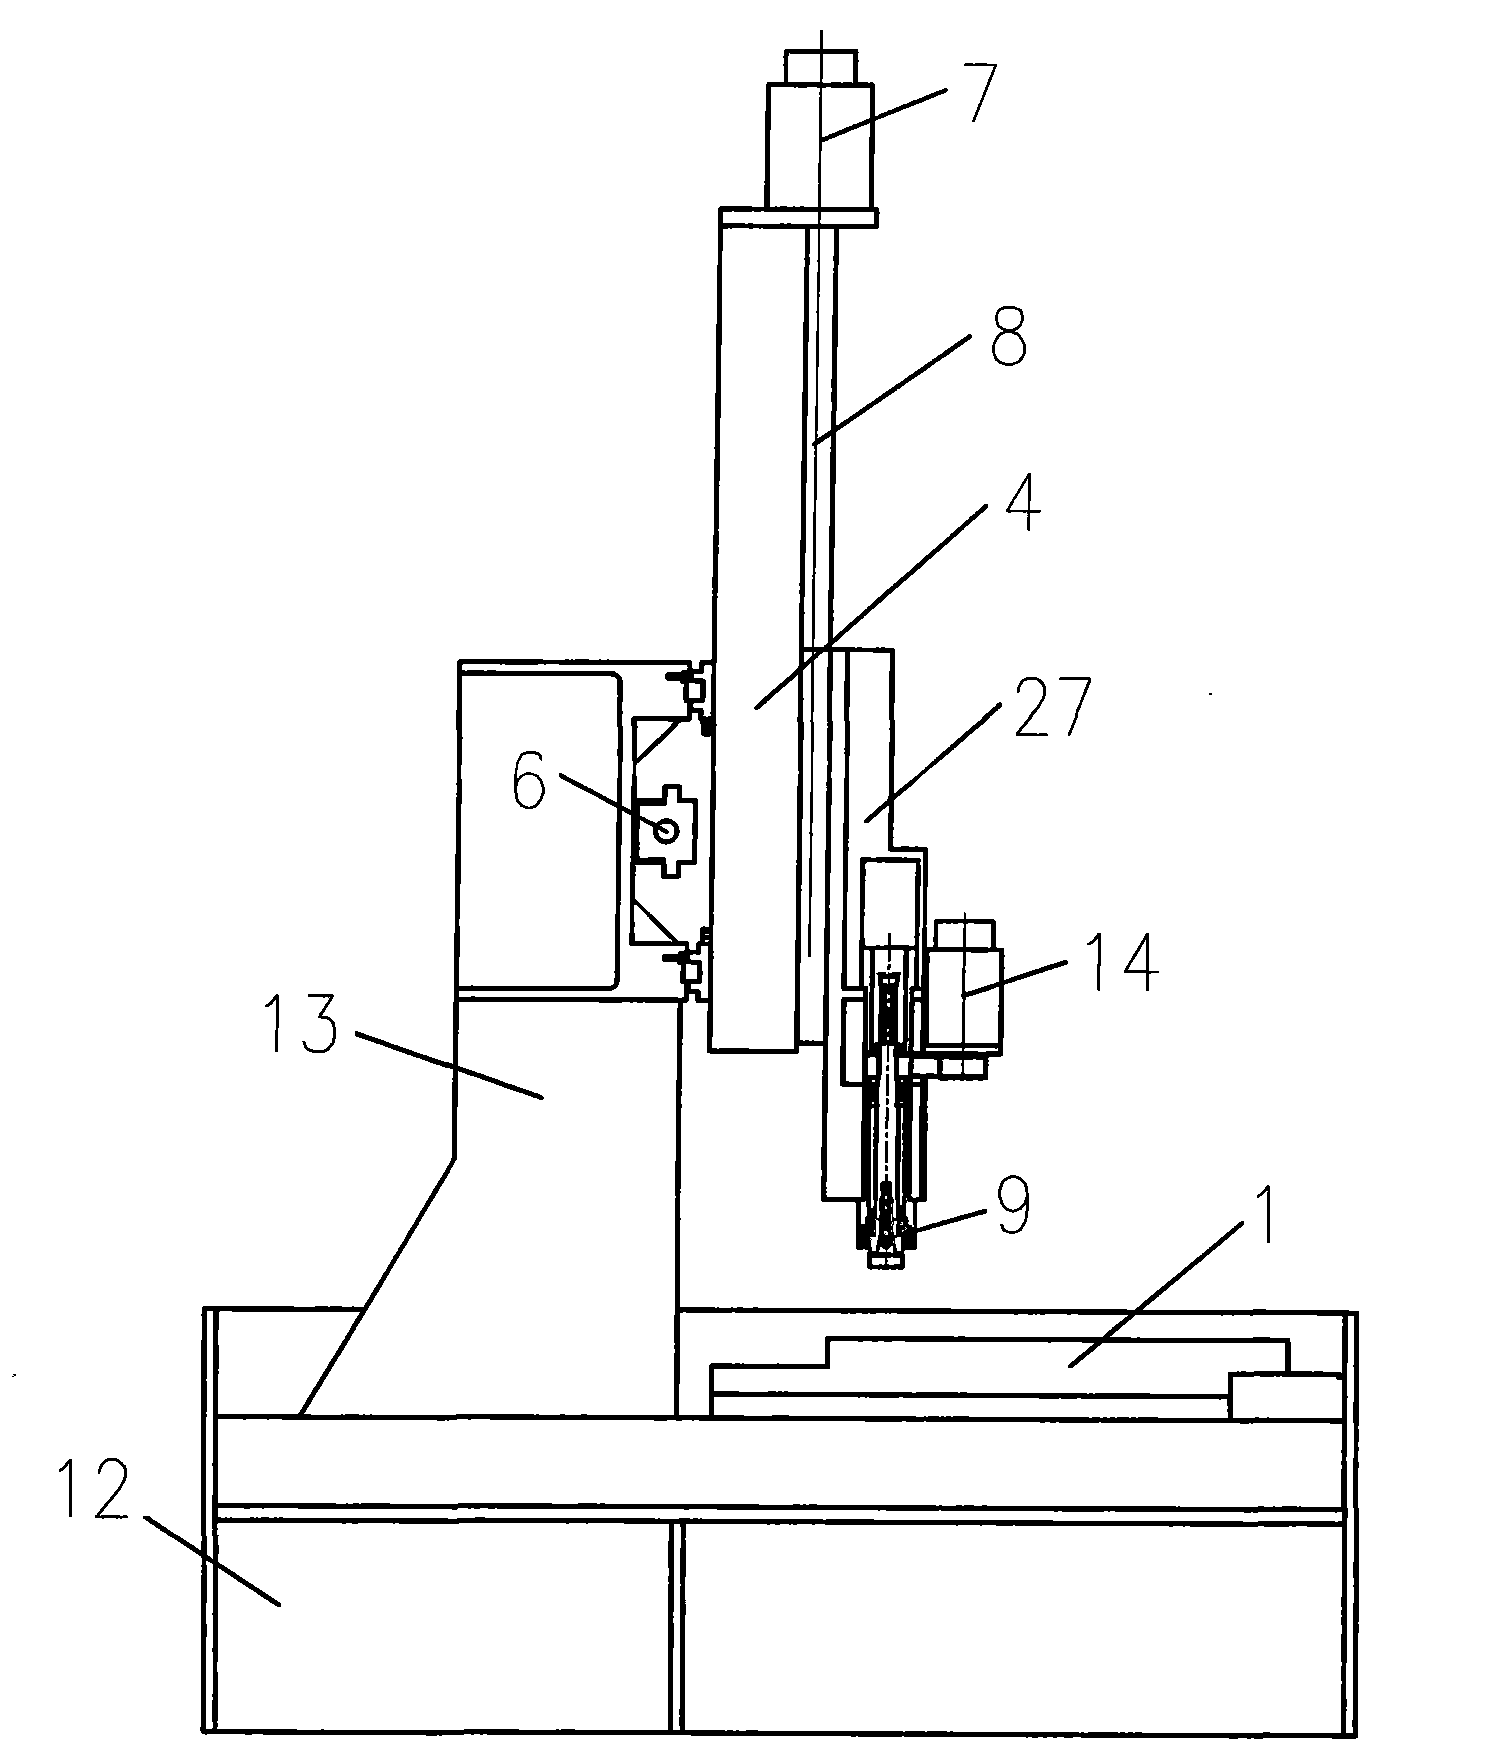 Gantry type multiple-spindle machining center